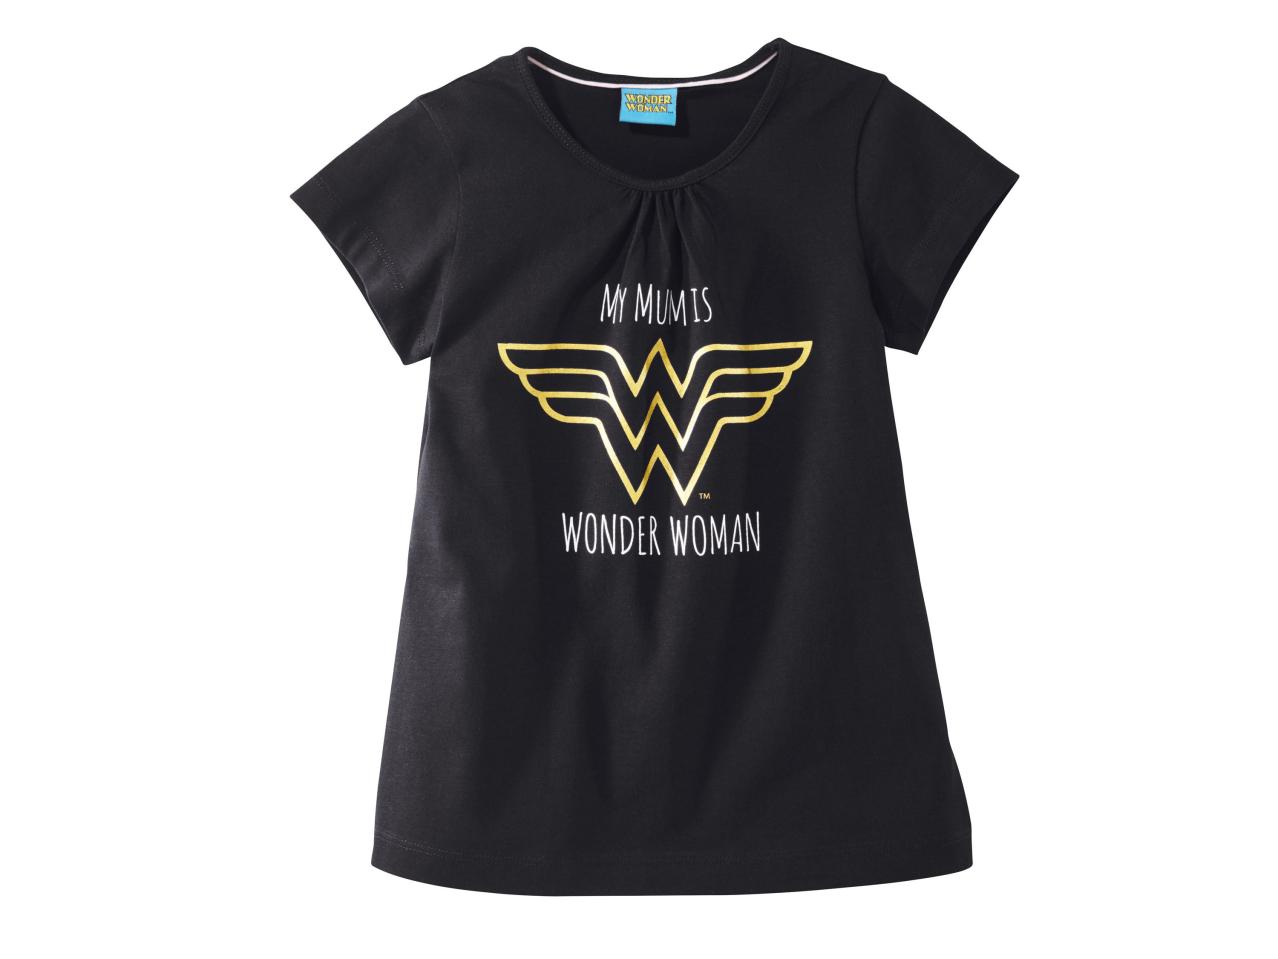 Girls' T-Shirt "Batman, Superman, Wonderwoman"